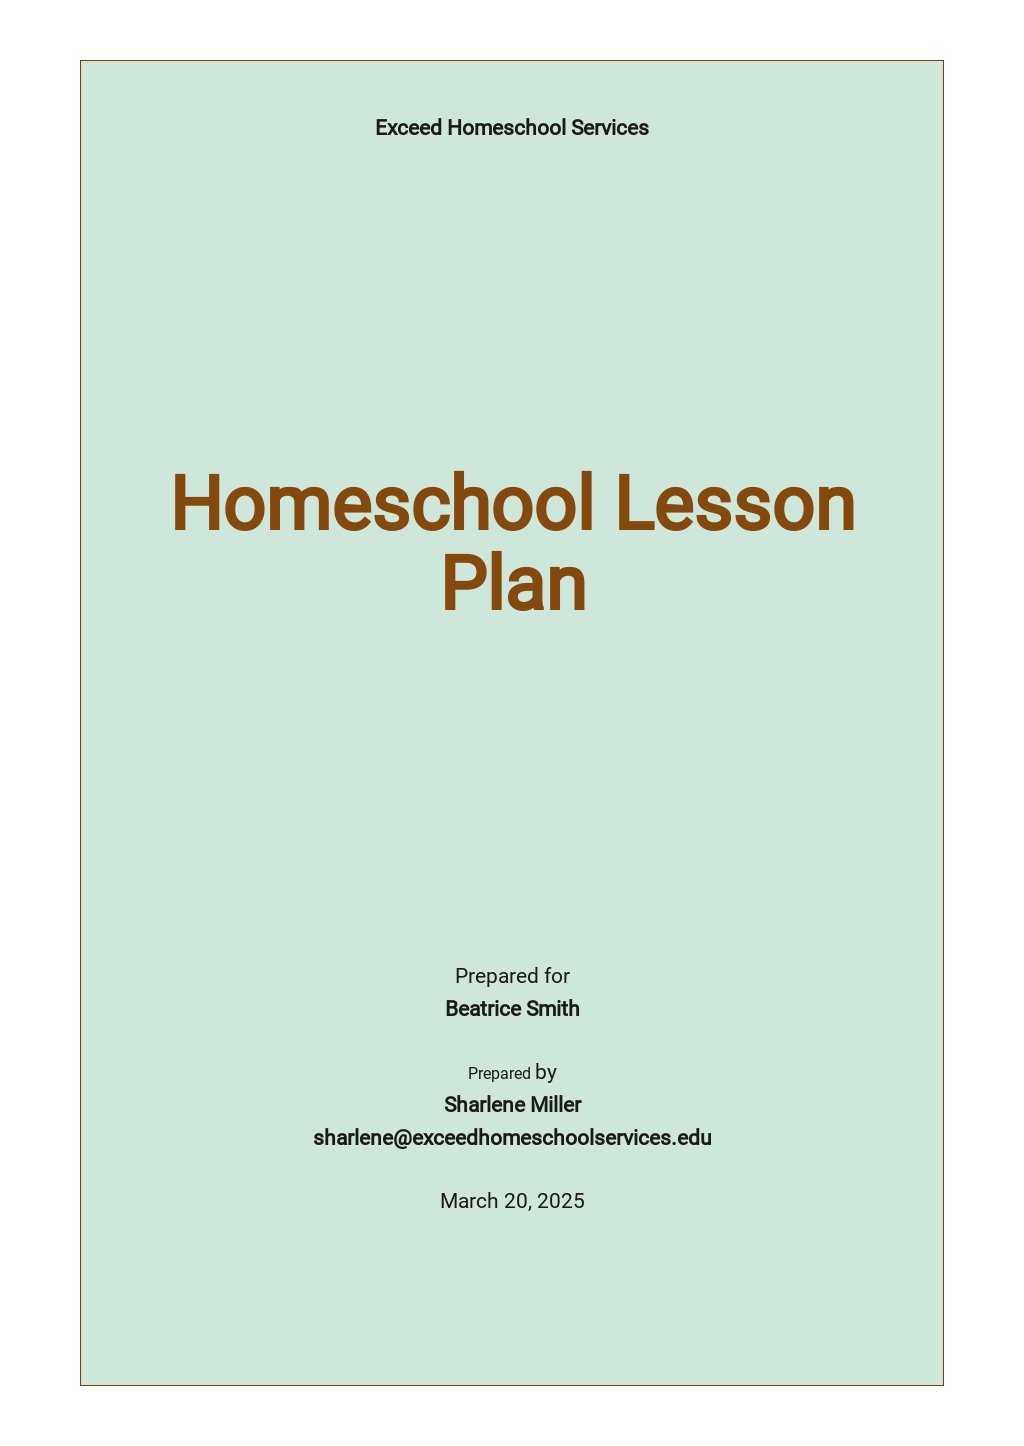 homeschool education plan template nevada